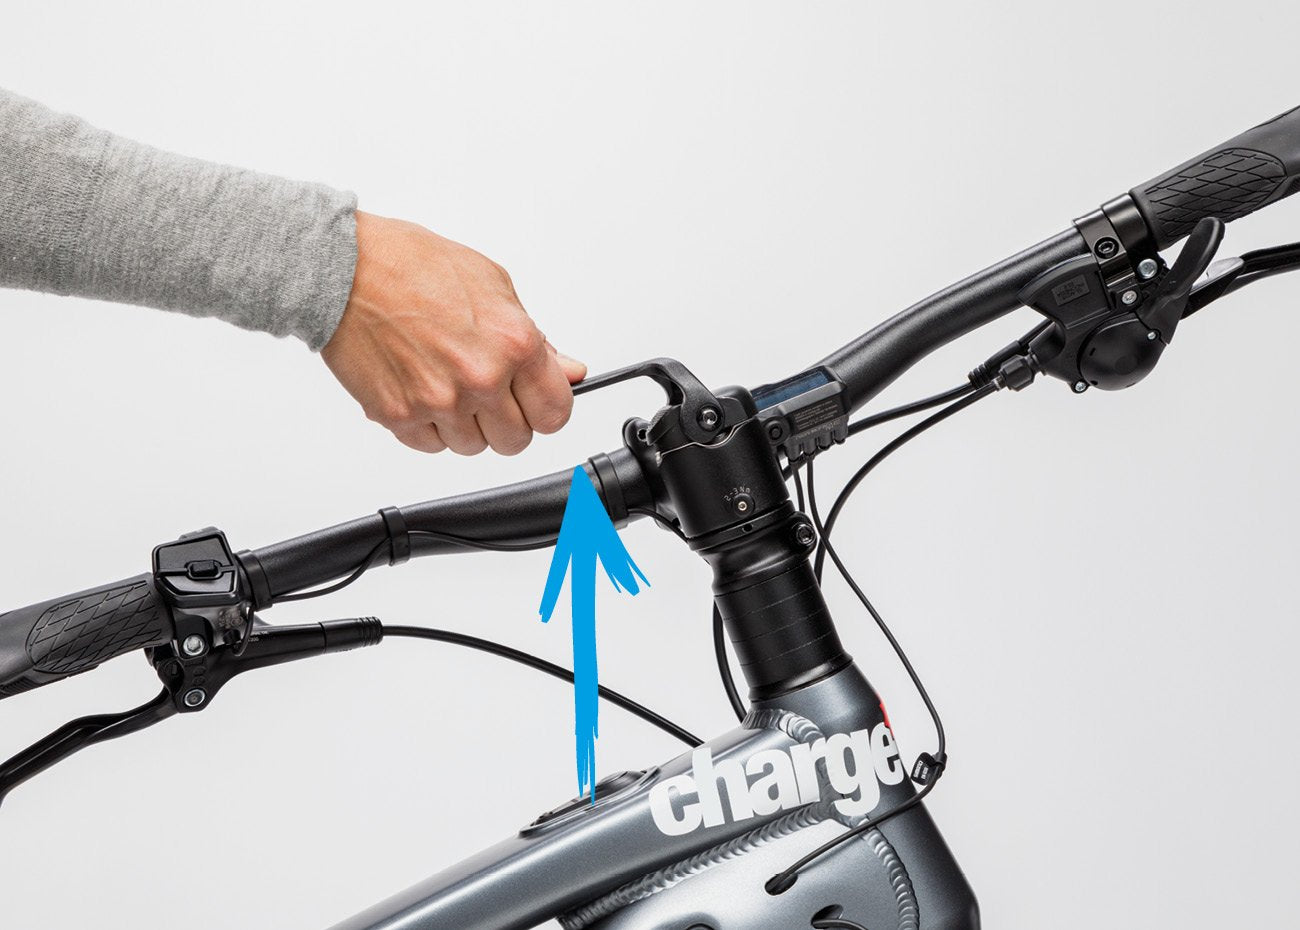 How to adjust handlebars on an electric bike